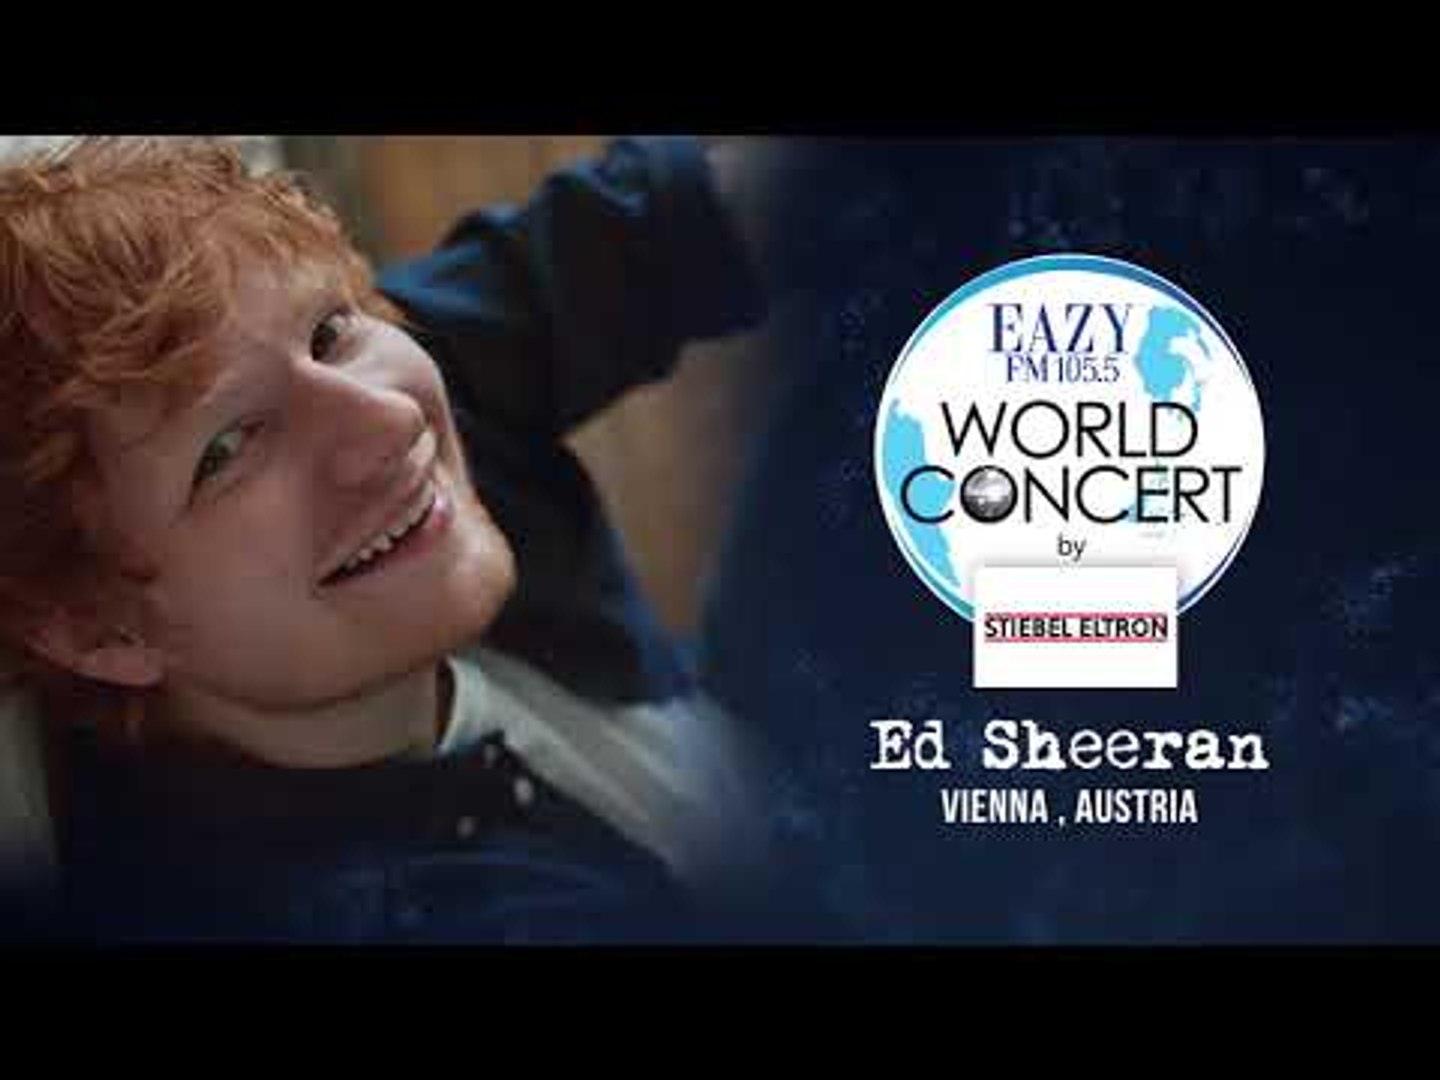 Eazy World Concert : Ed Sheeran in Vienna , Austria